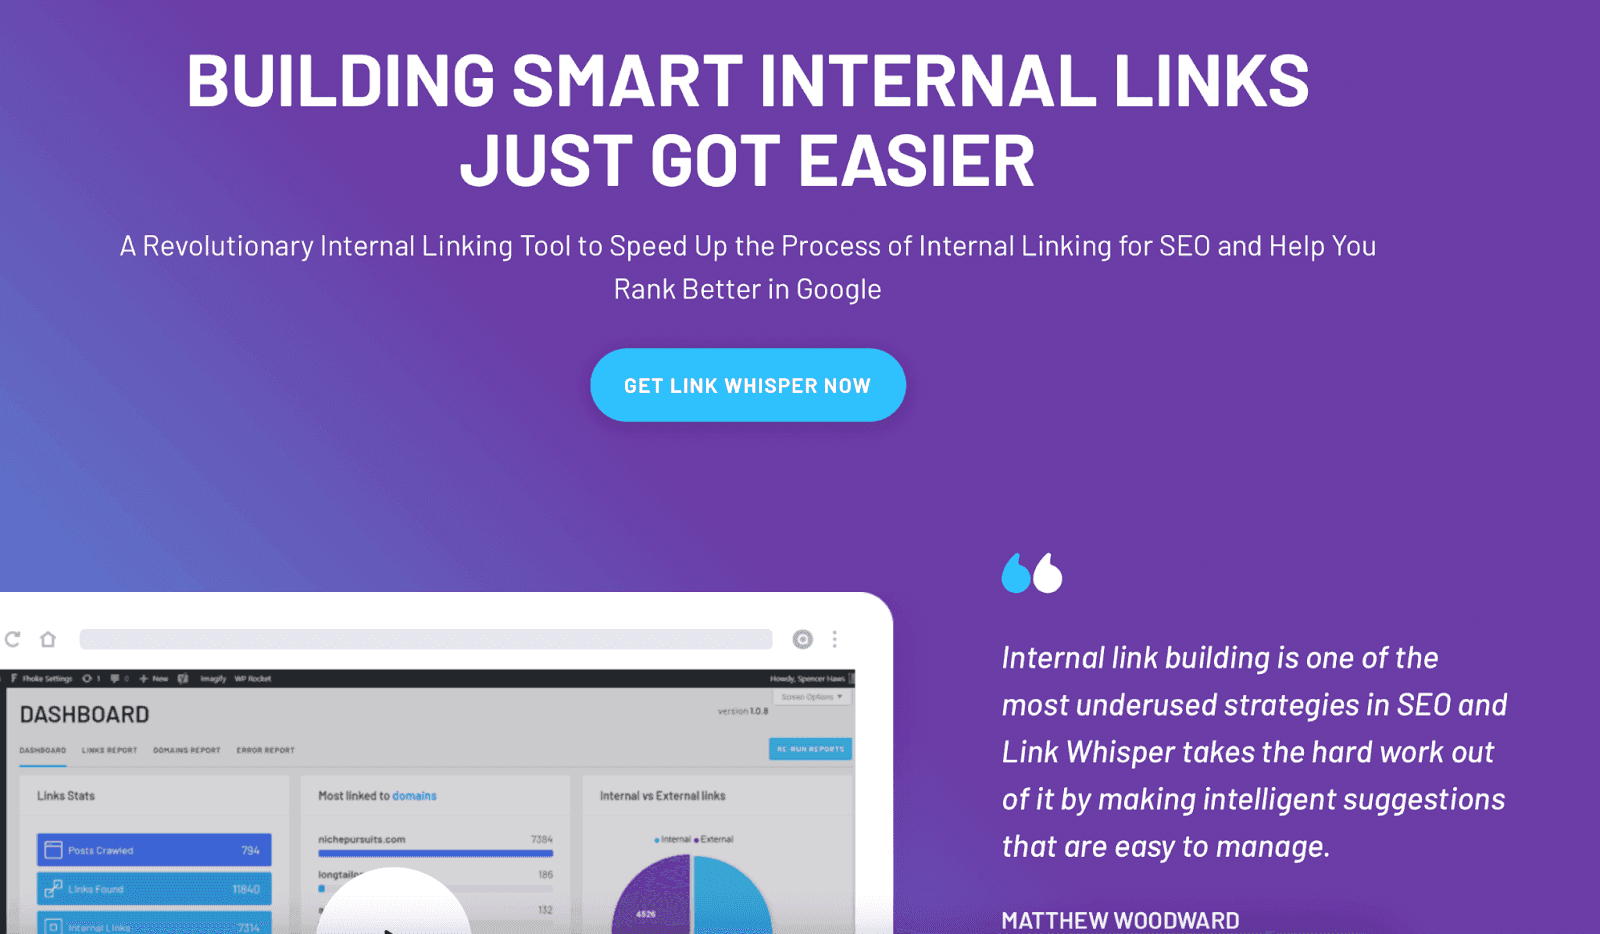 Building smart internal links just got easier